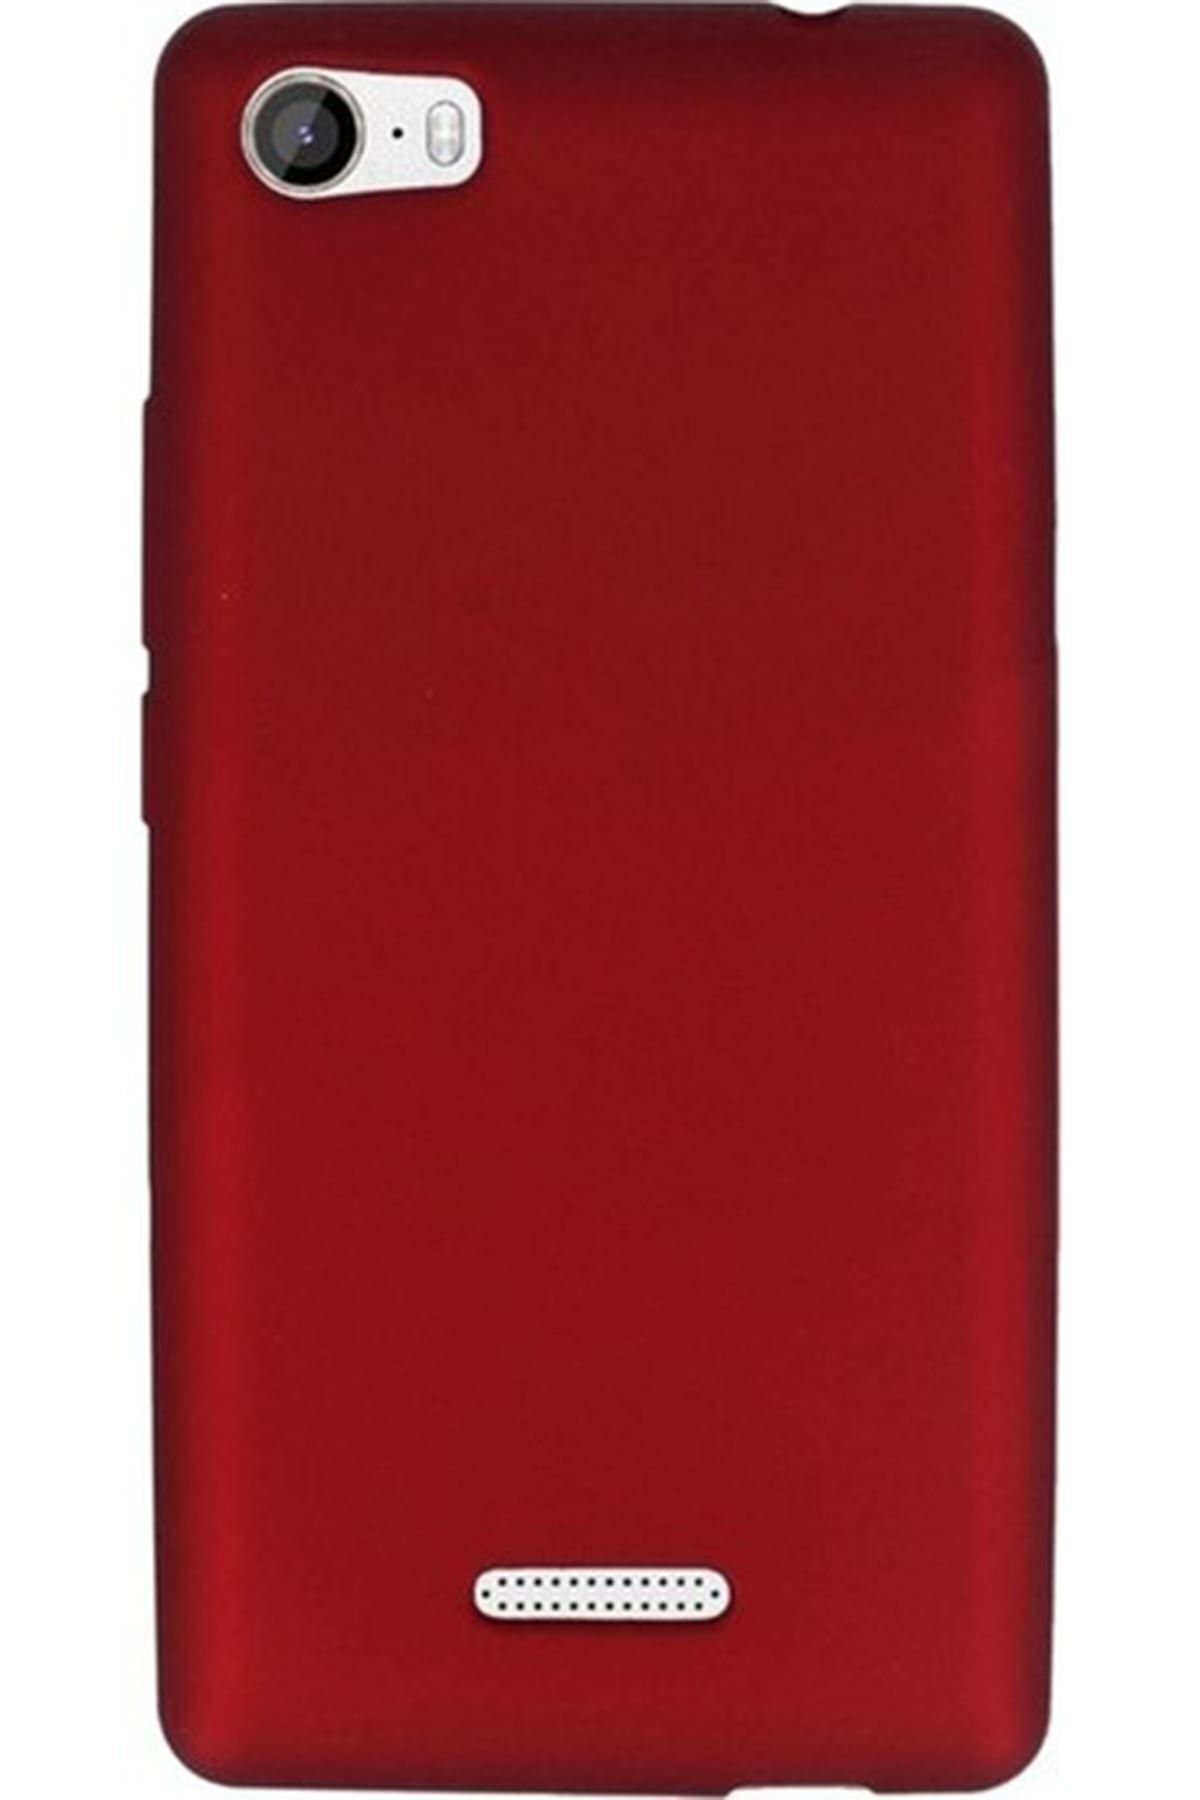 Casper Via M1 Uyumlu Kılıf Premier Renkli Esnek Silikon Kırmızı